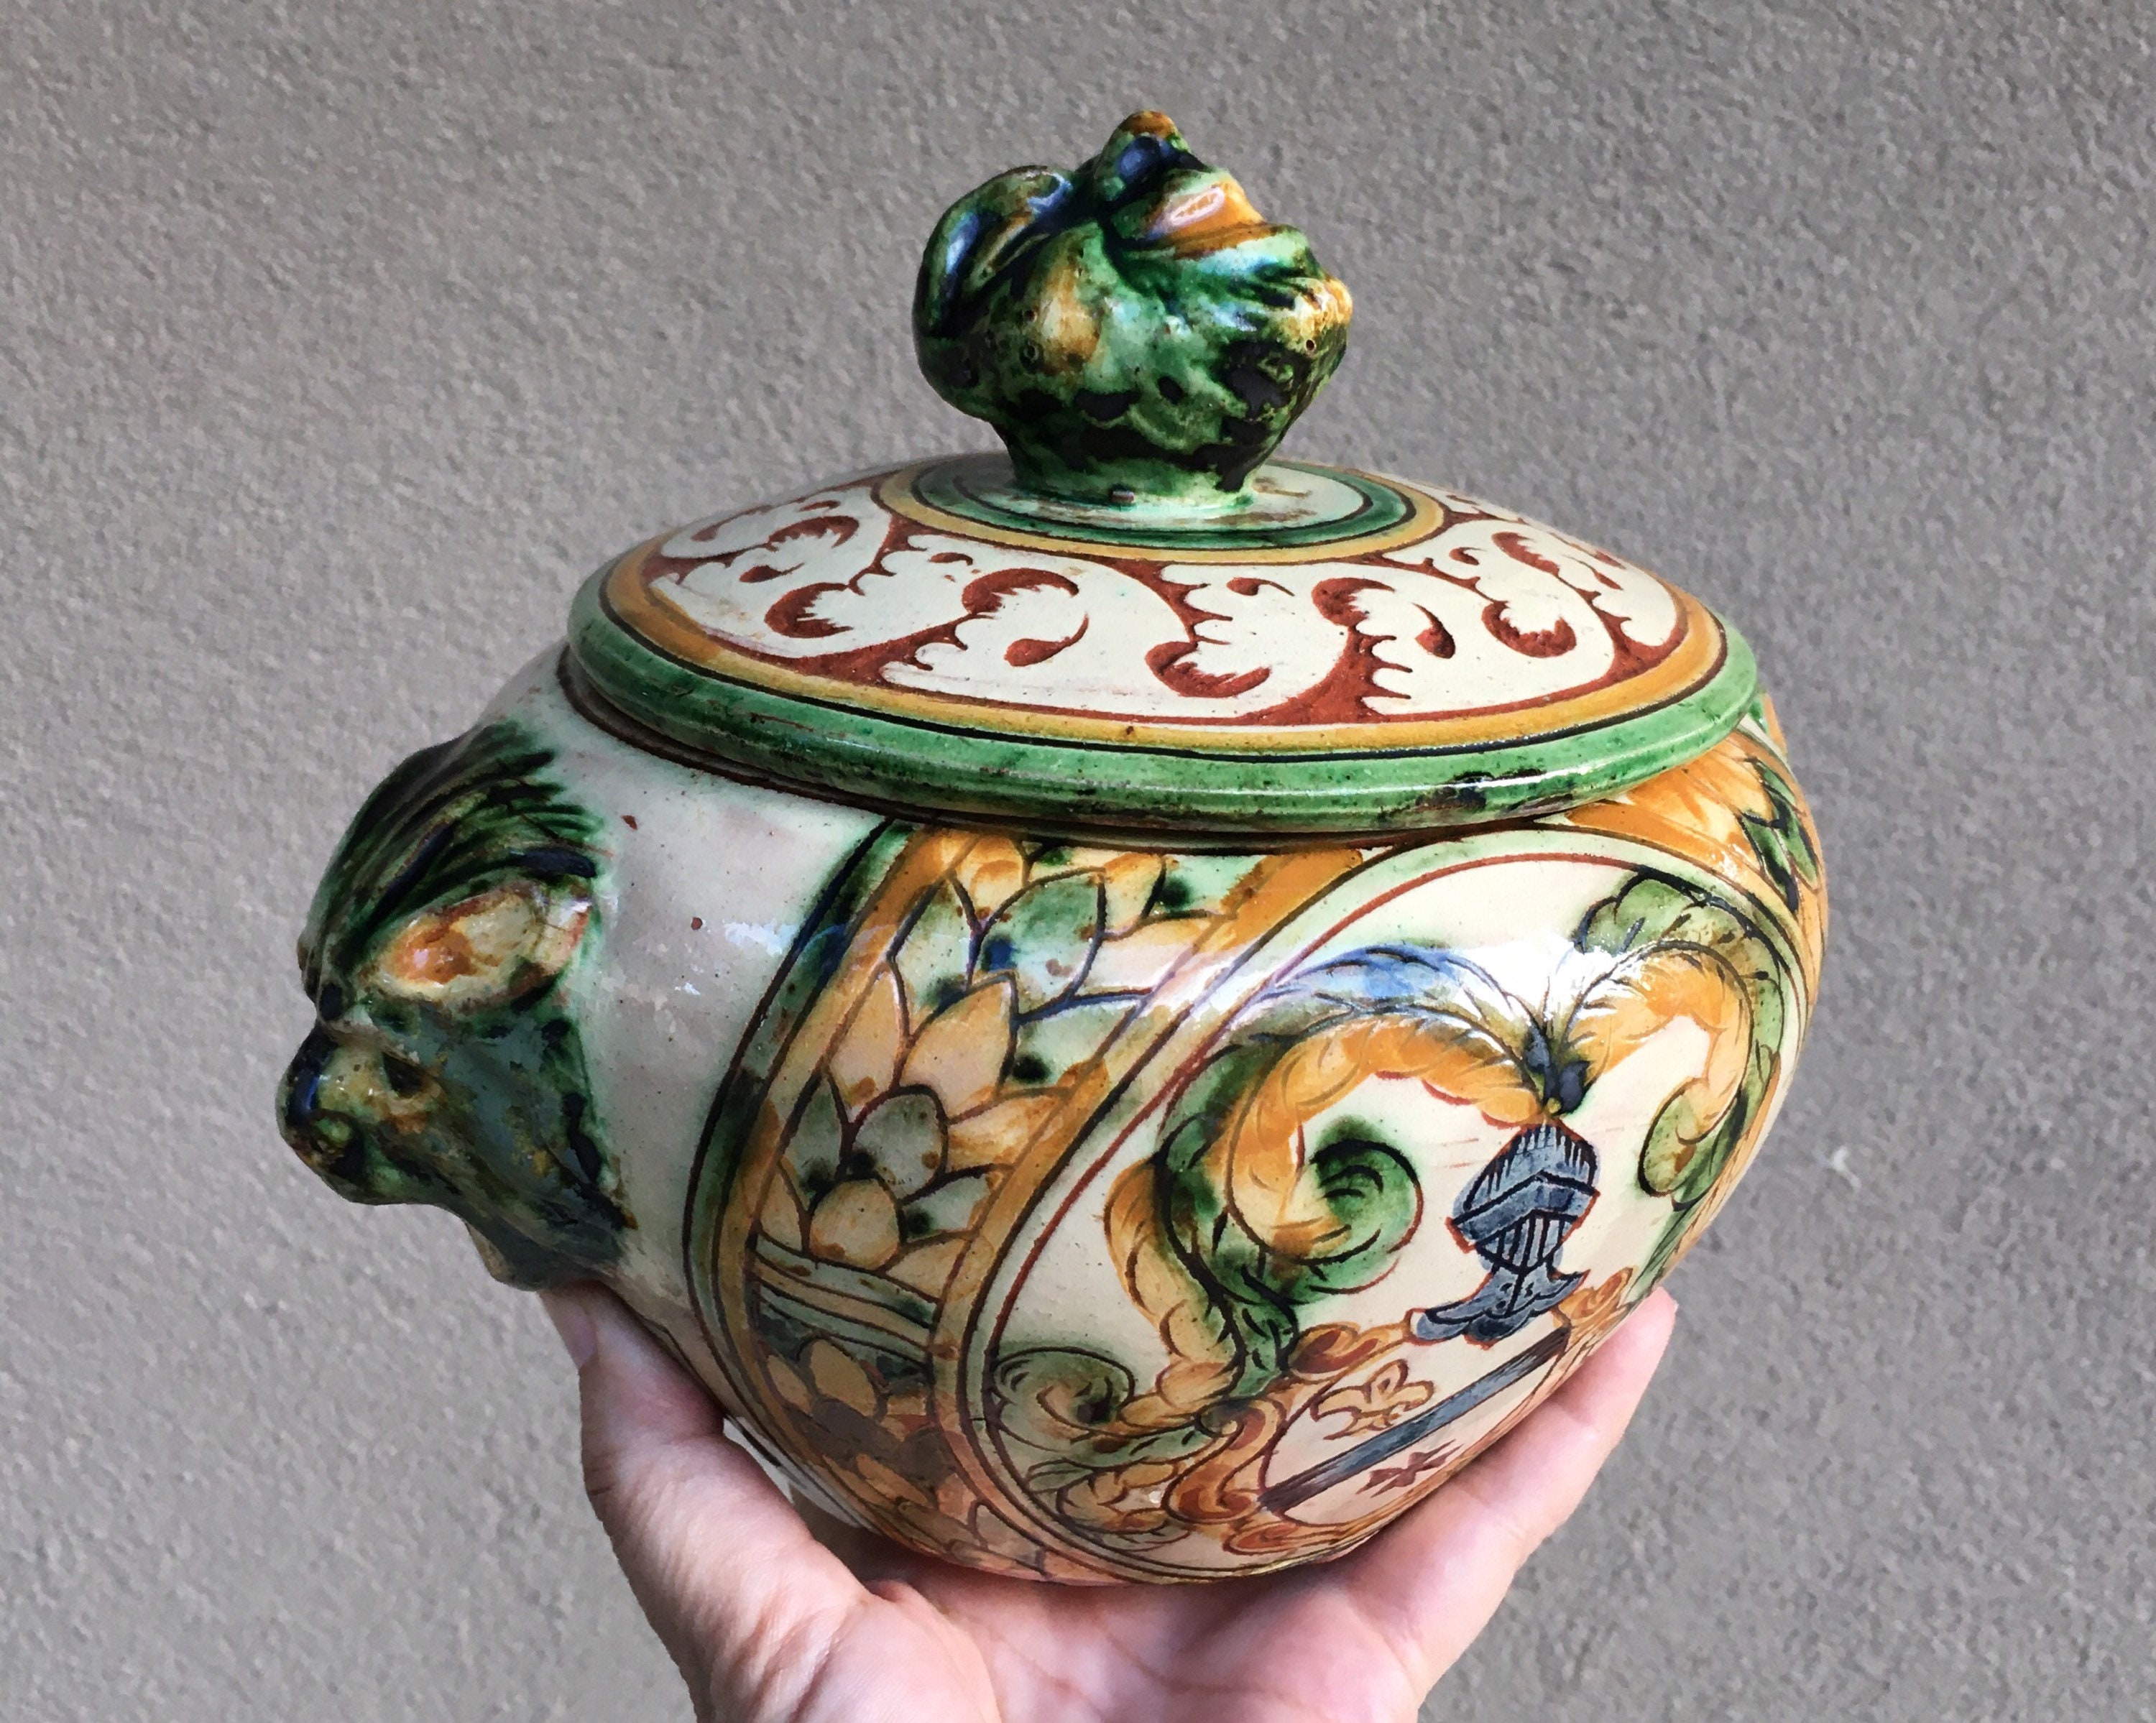 Vintage Italian Art Pottery Lidded Jar or Urn with Face Handles